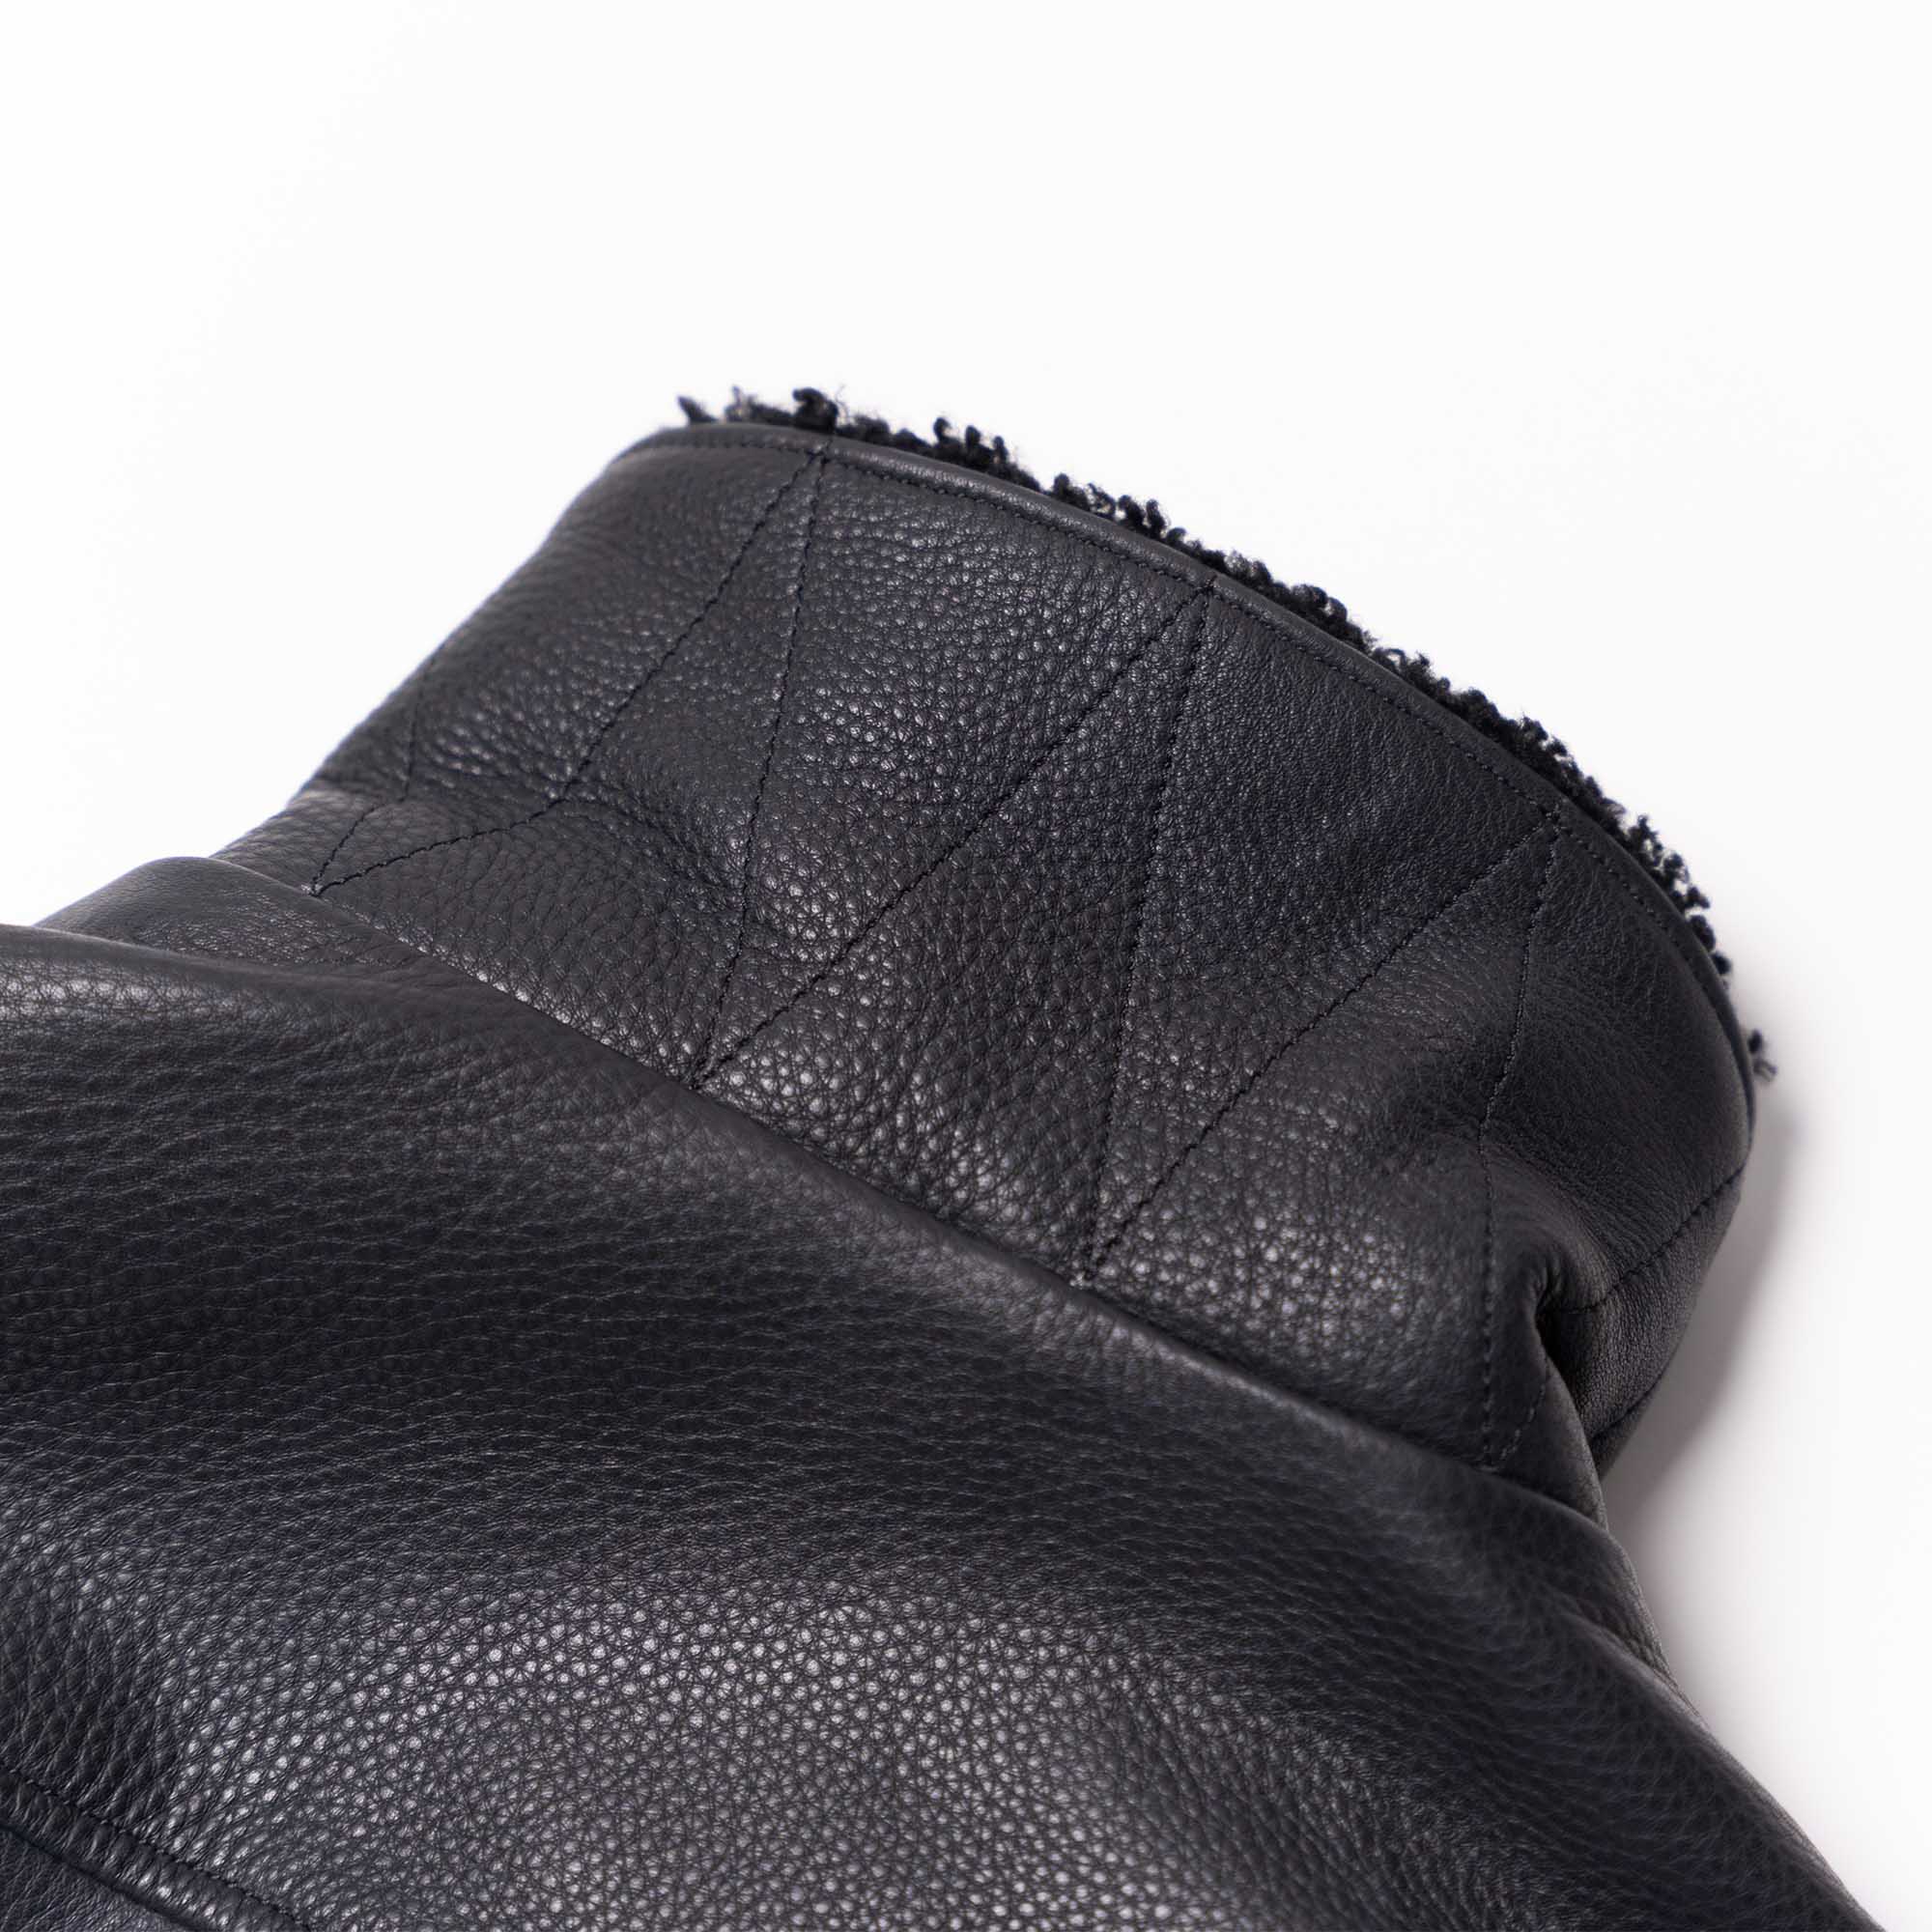 "Deck" N-1 Black Aniline Leather Jacket